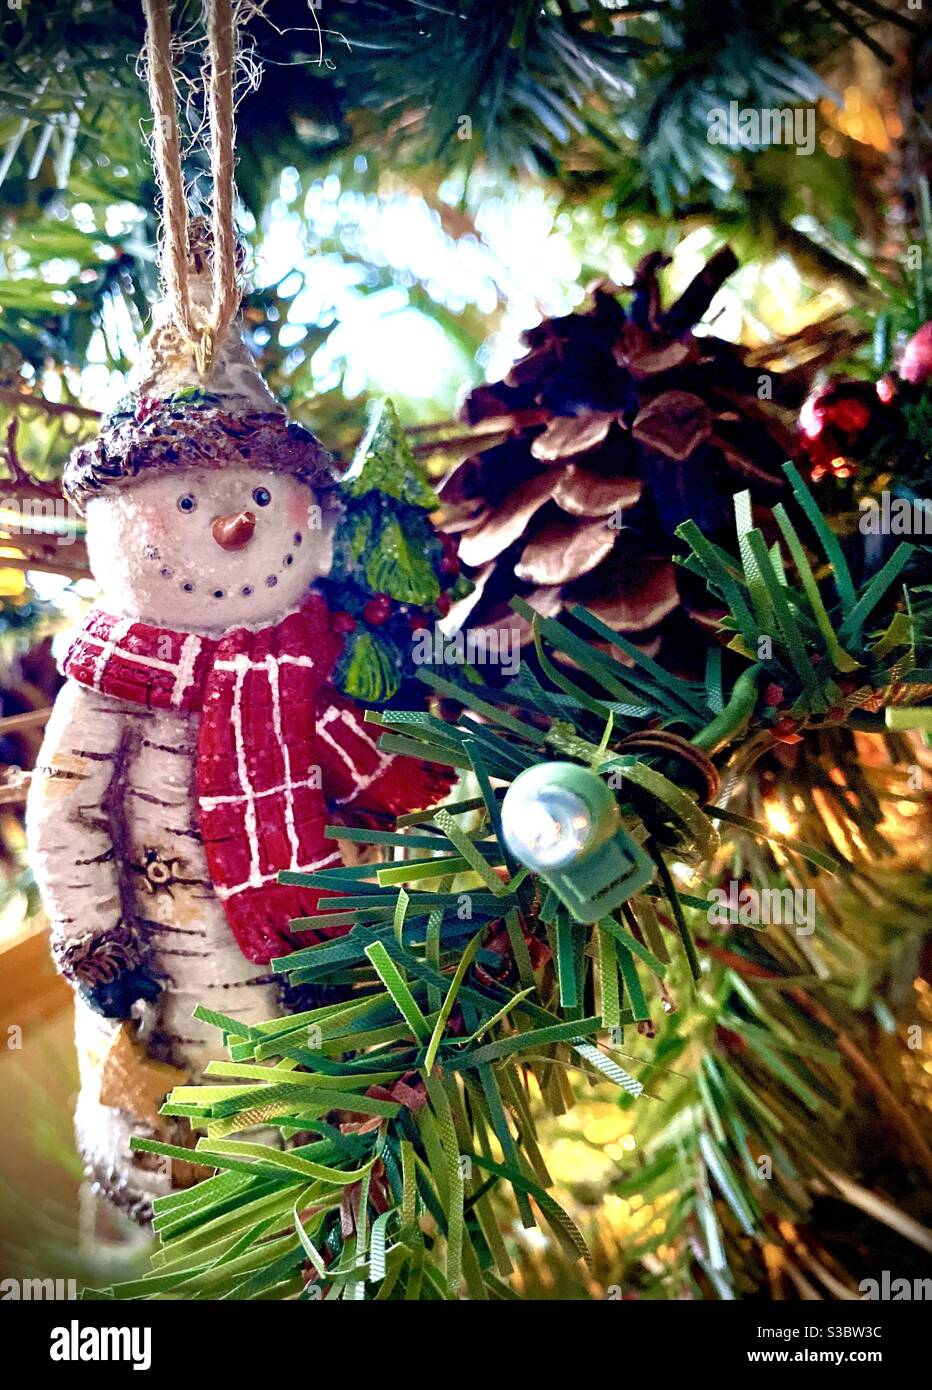 Snowman Christmas decoration Stock Photo